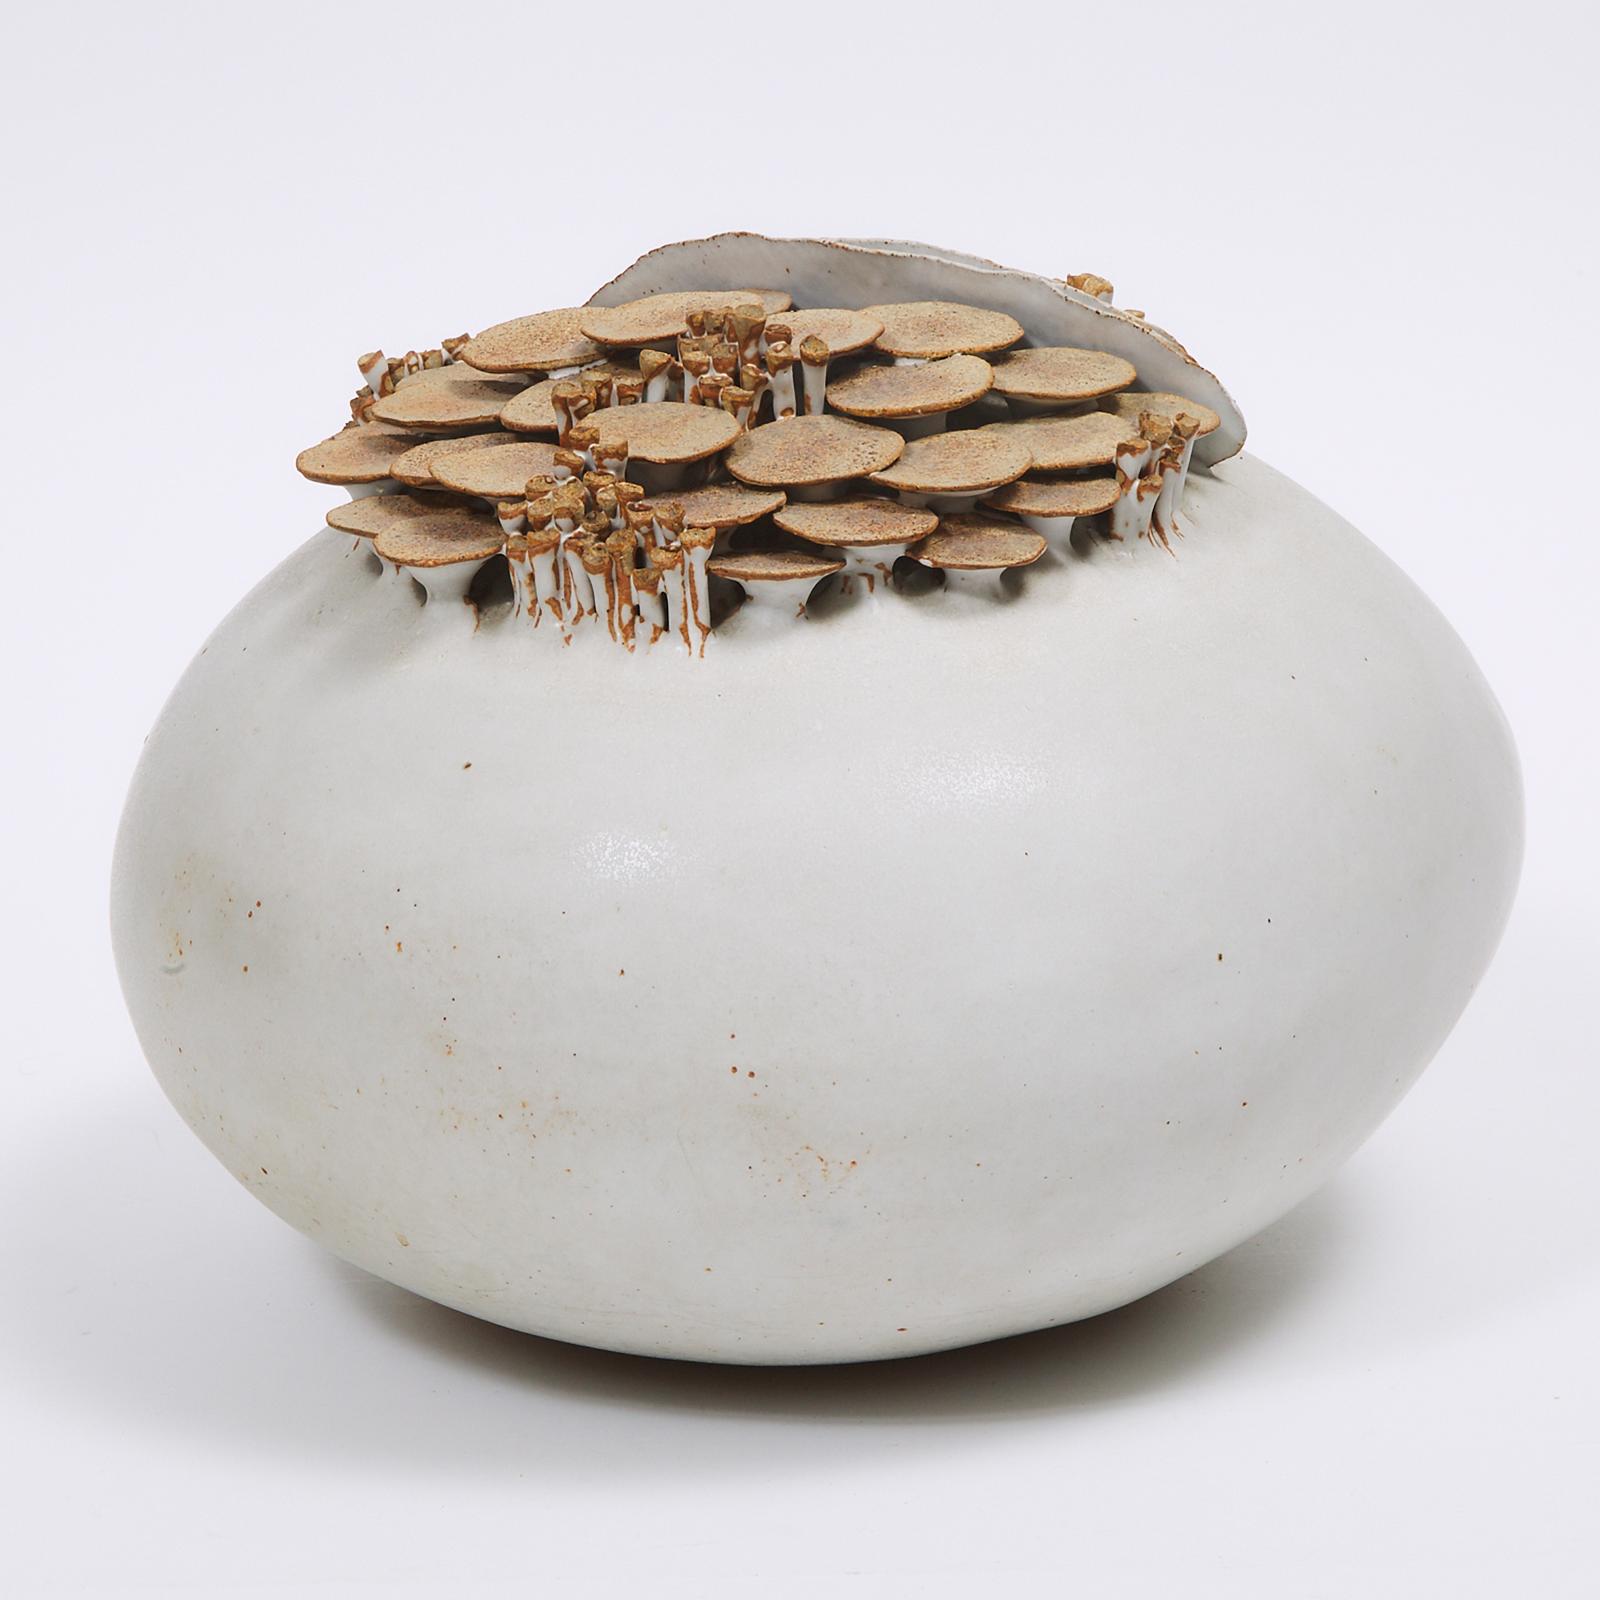 Jimmy Hong Louie (1950) - Ovoid Sphere With Mushrooms